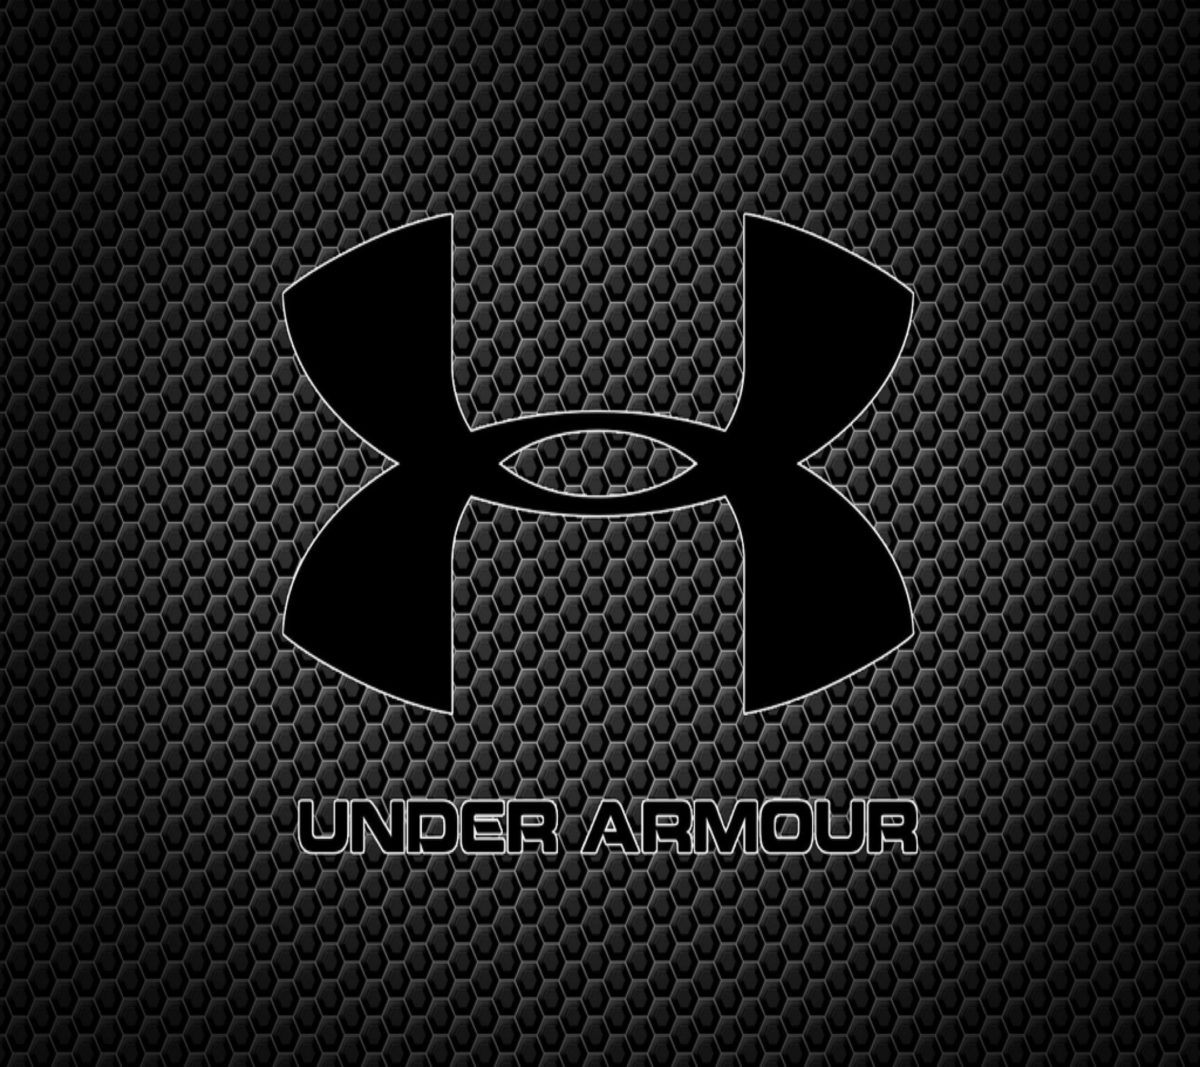 Under Armour logo wallpaper